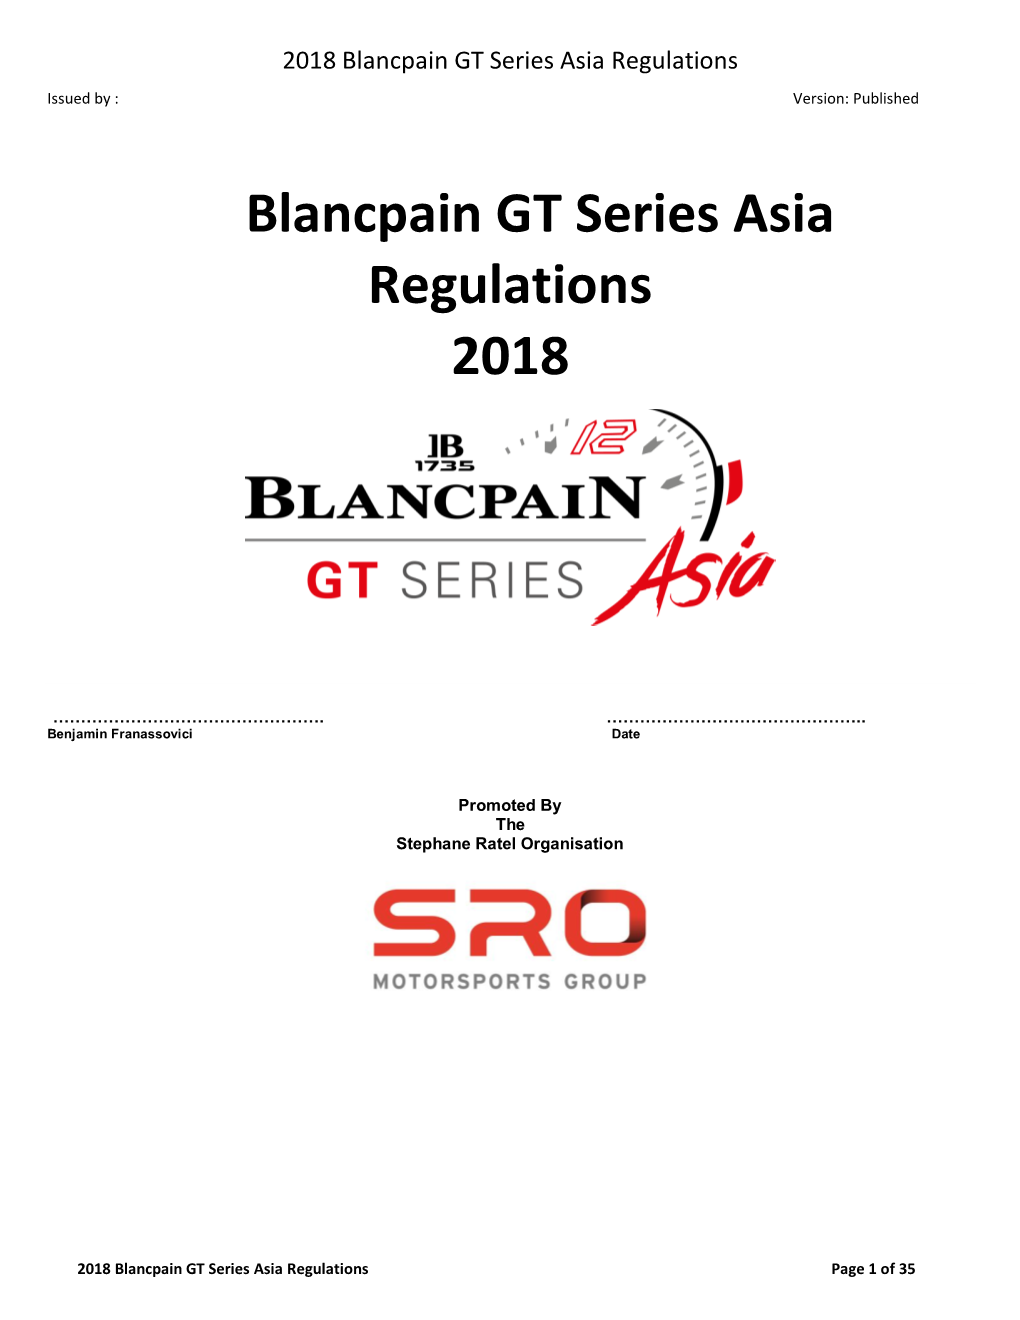 Blancpain GT Series Asia Regulations 2018